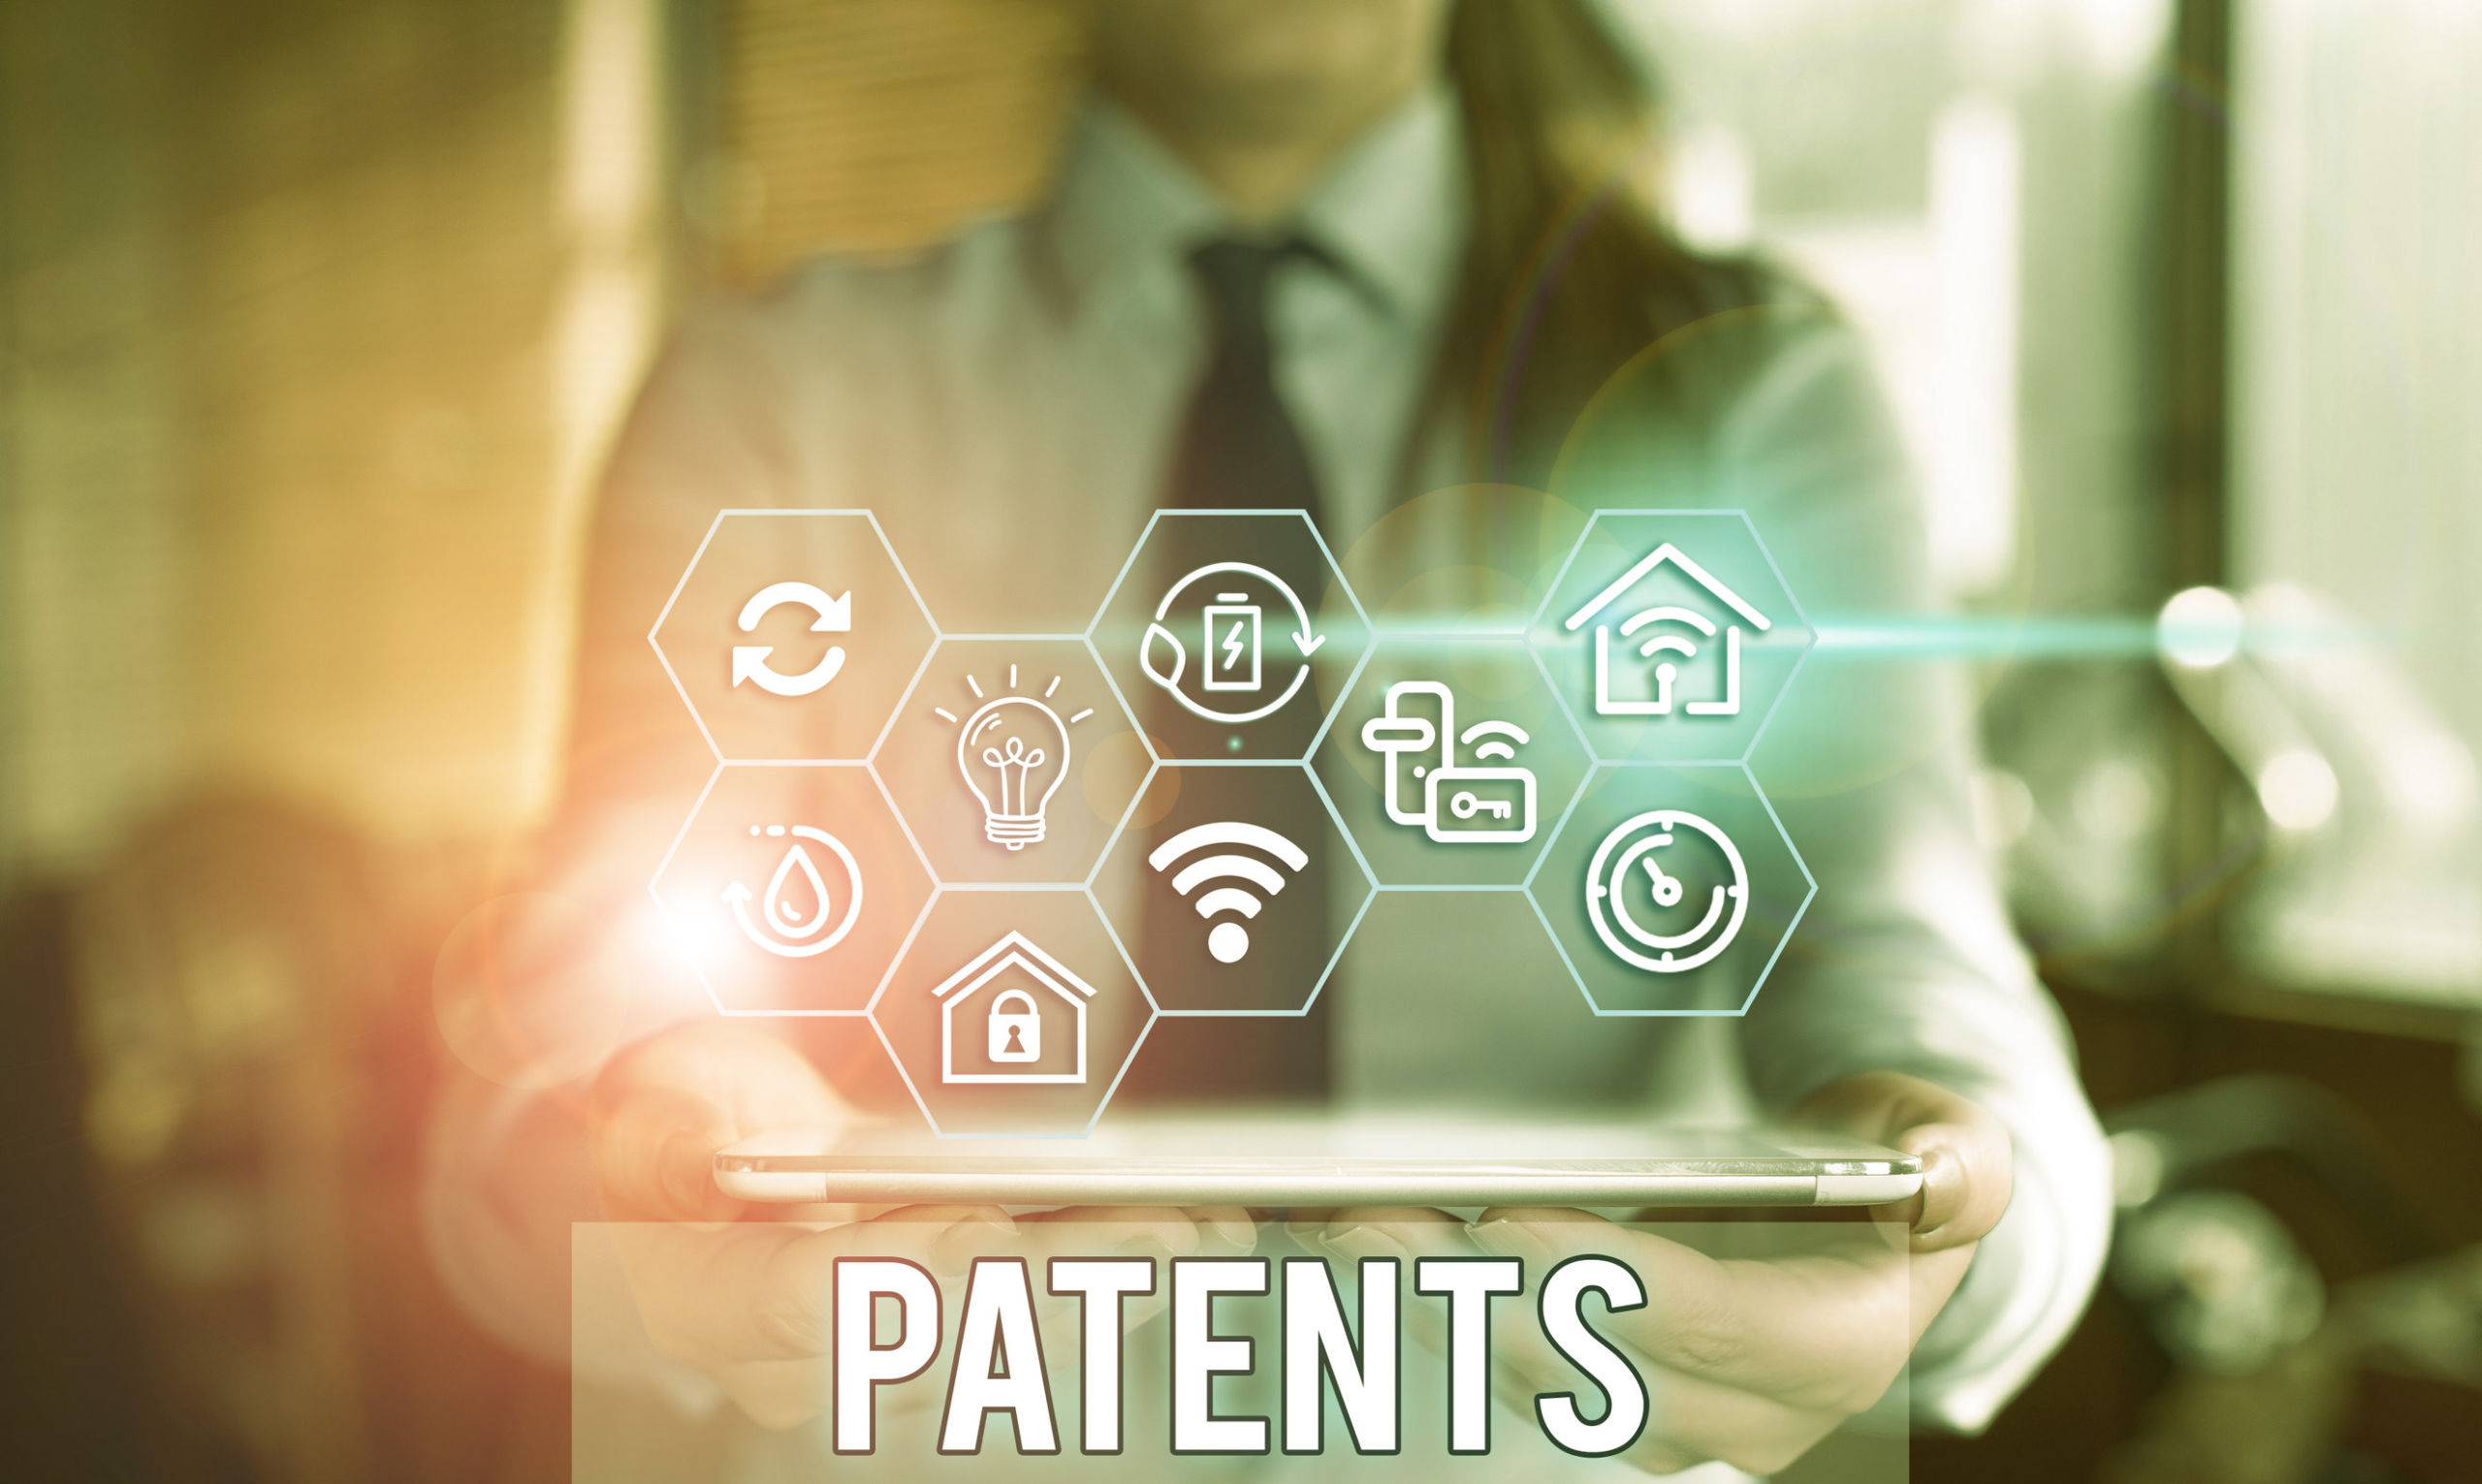 patent,portfolio,develop,webcast,value